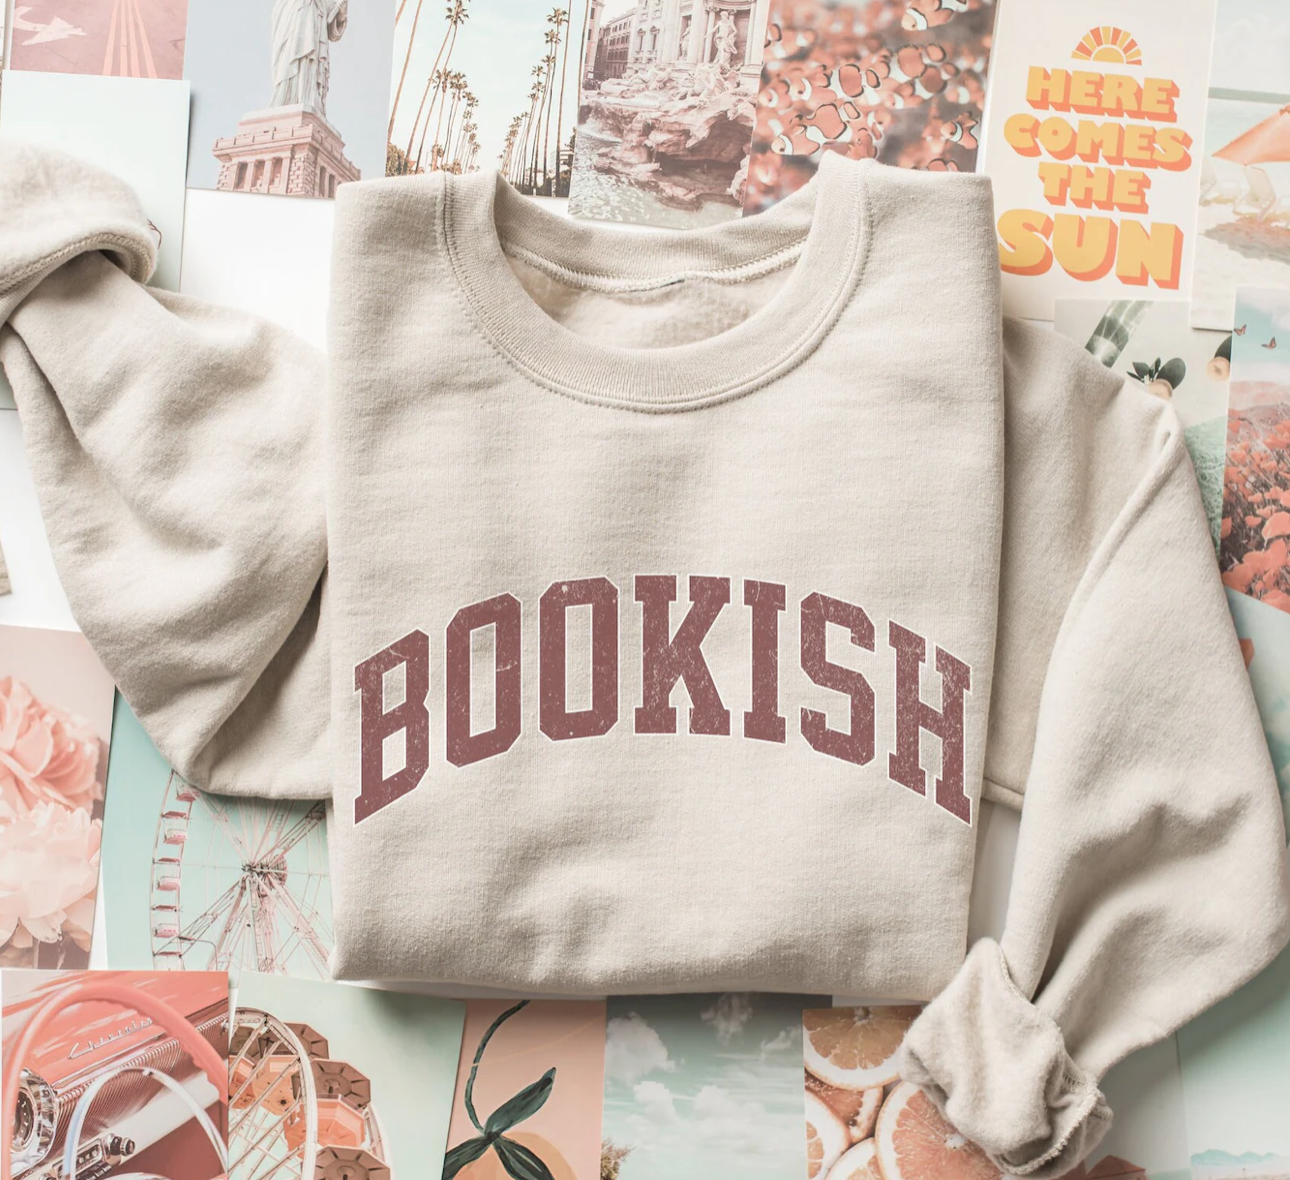 Sweatshirt that says "Bookish"